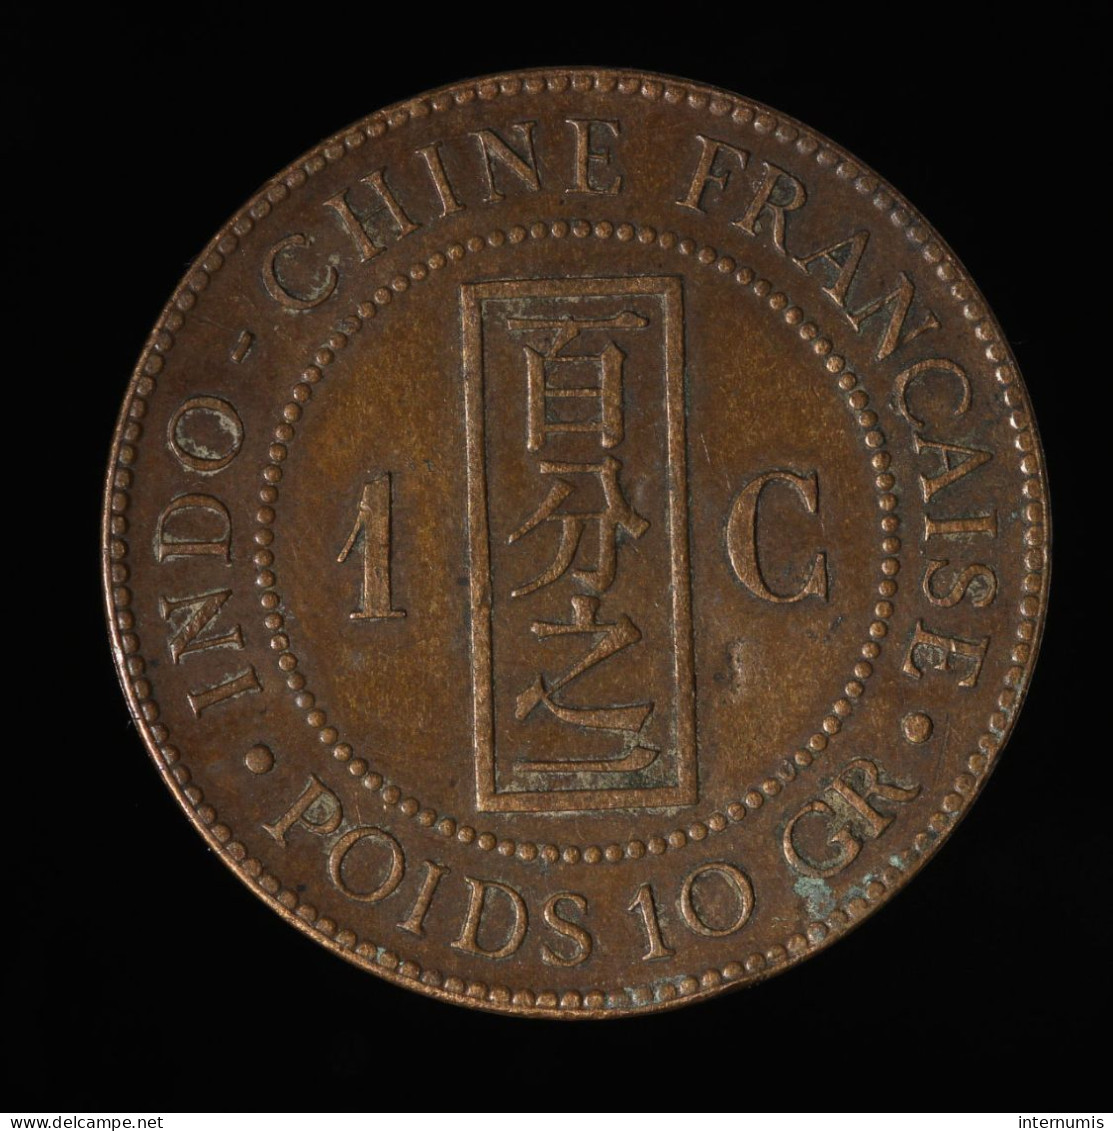  Indochine / Indochina, , 1 Centième / 1 Cent, 1892, , Bronze, TTB (EF),
KM#1, Lec.43 - Indochine